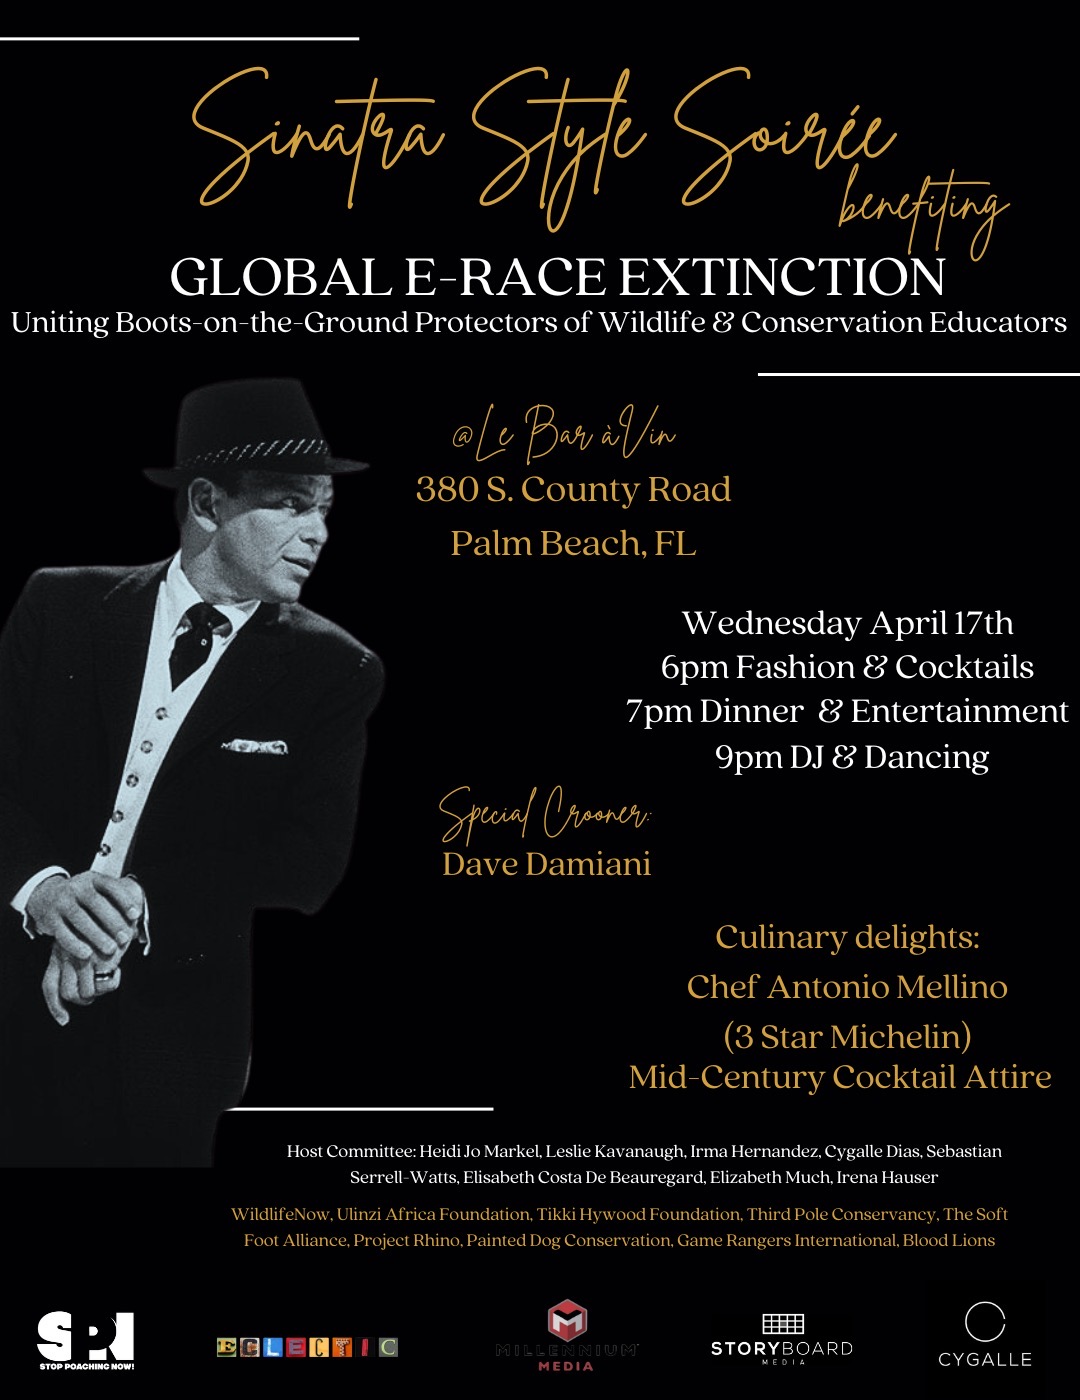 GLOBAL E-RACE EXTINCTION - PALM BEACH, FL